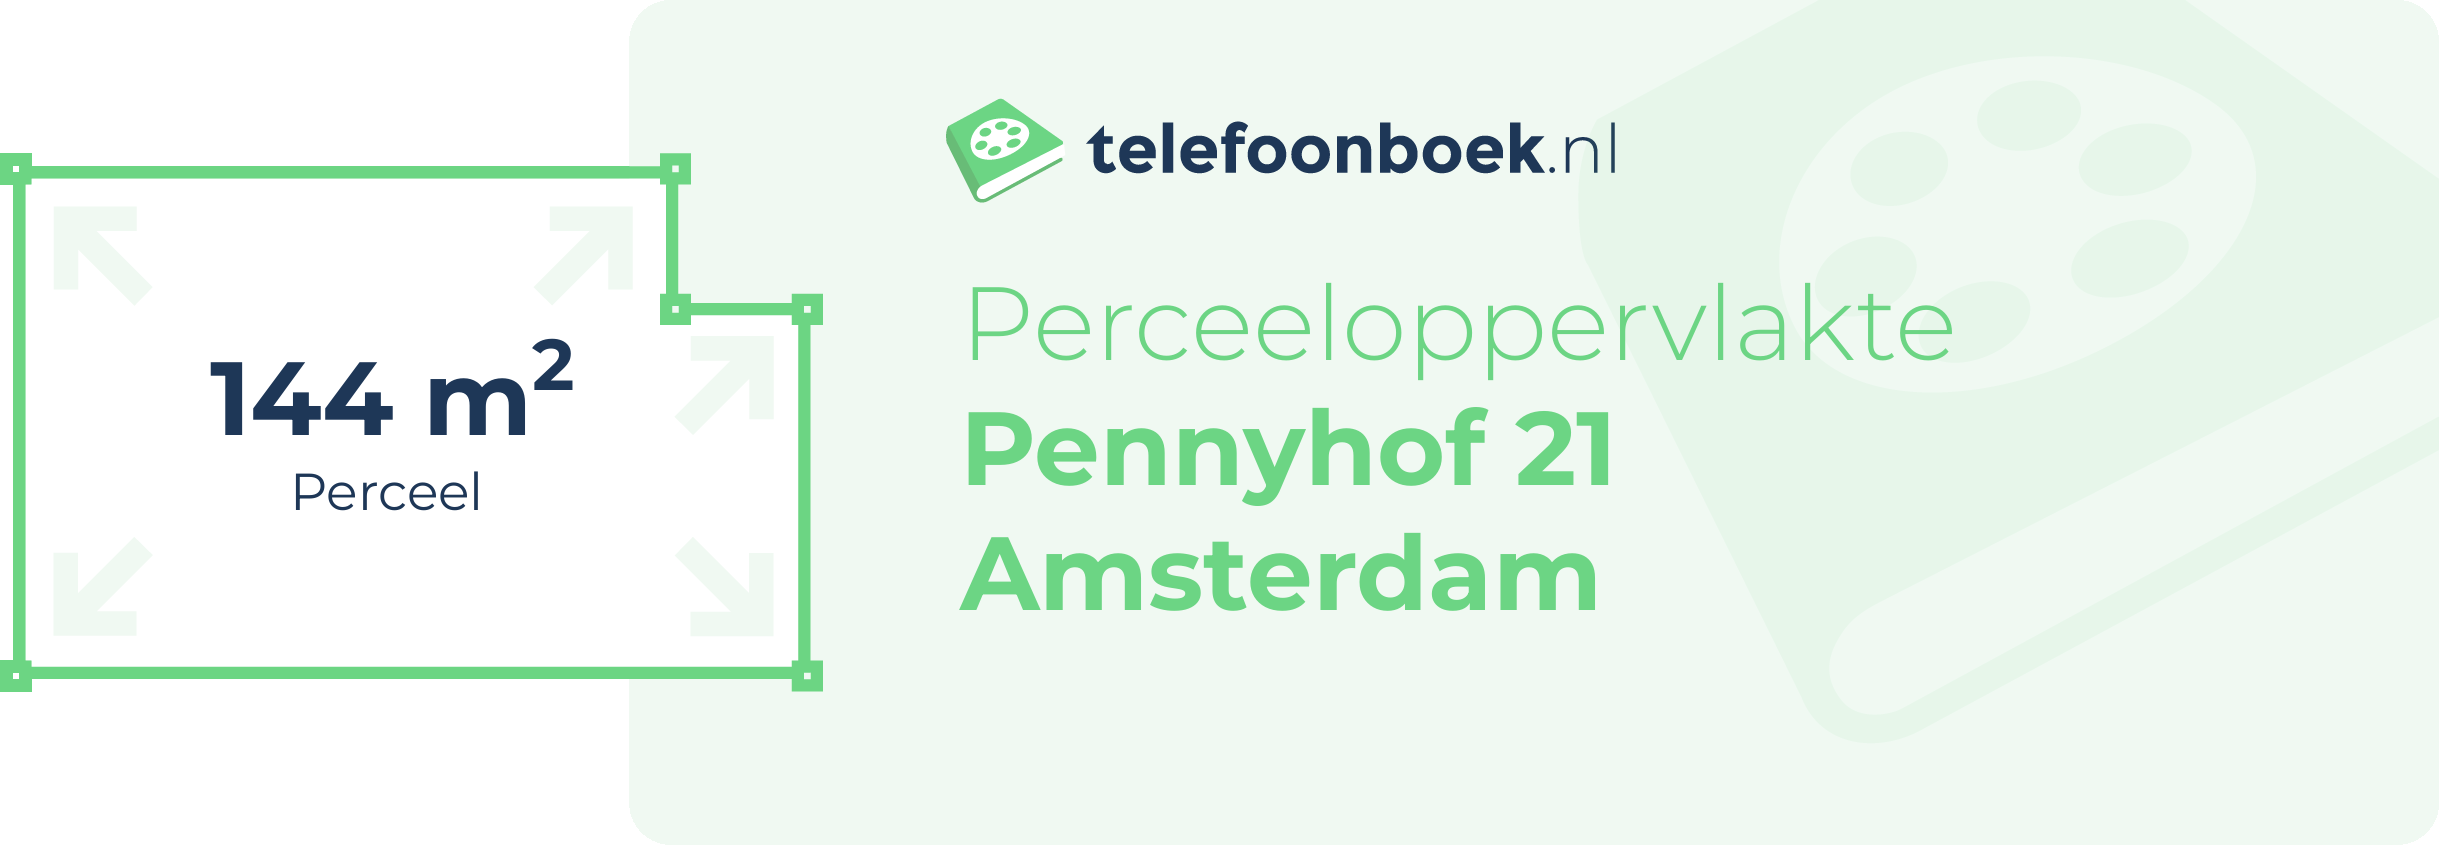 Perceeloppervlakte Pennyhof 21 Amsterdam